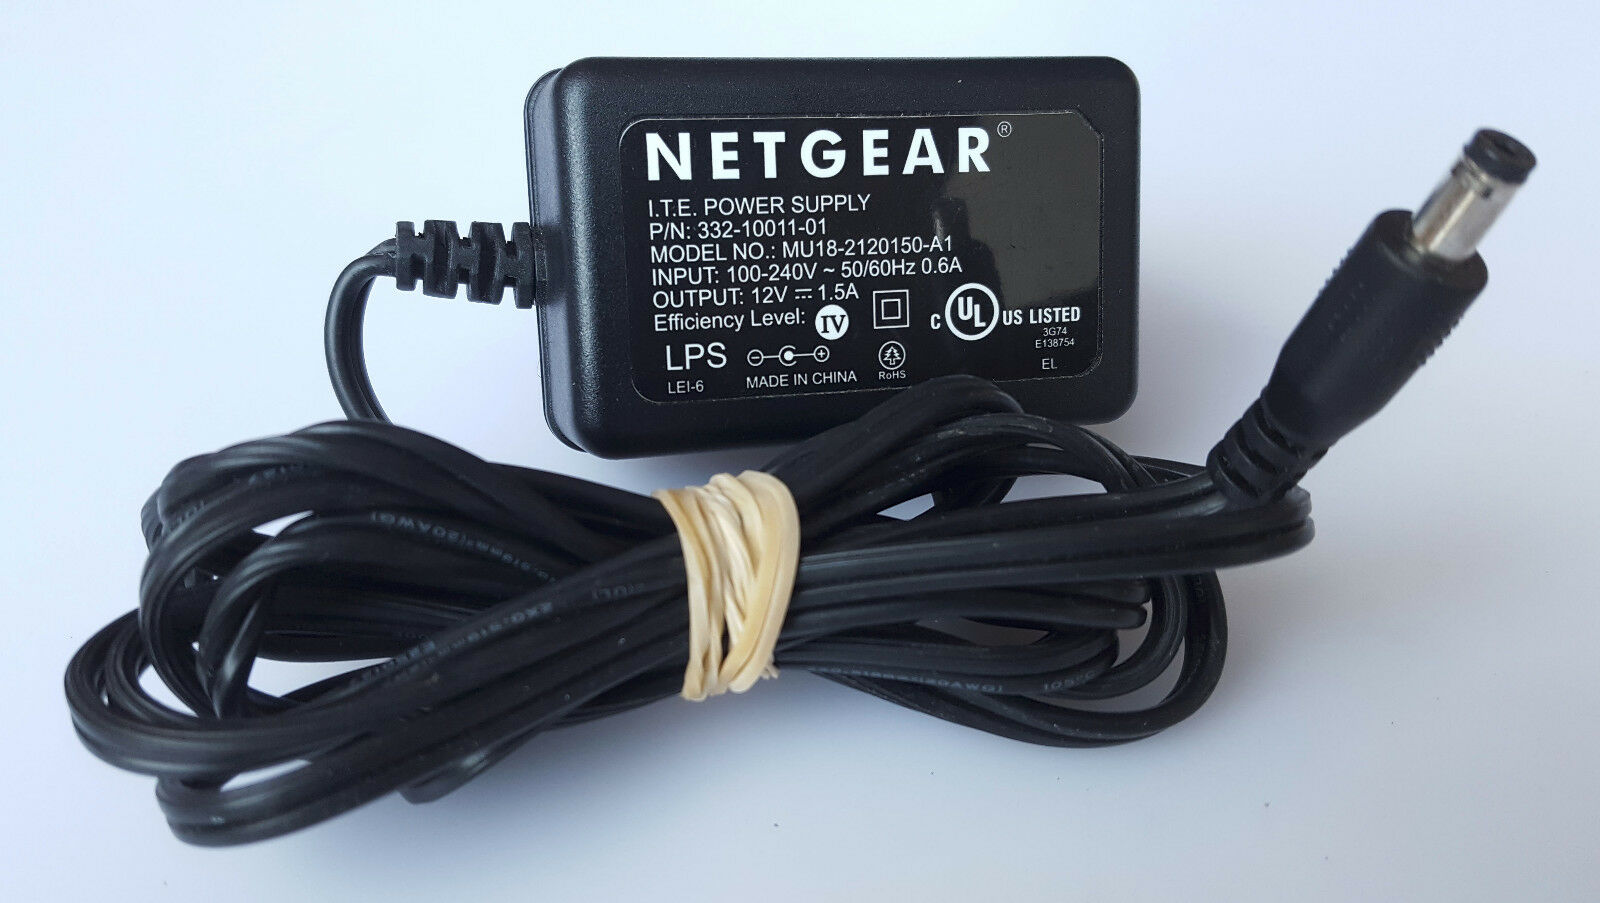 New NETGEAR MU18-2120150-A1 332-10011-01 AC DC POWER SUPPLY ADAPTER 12V 1.5A US PLUG